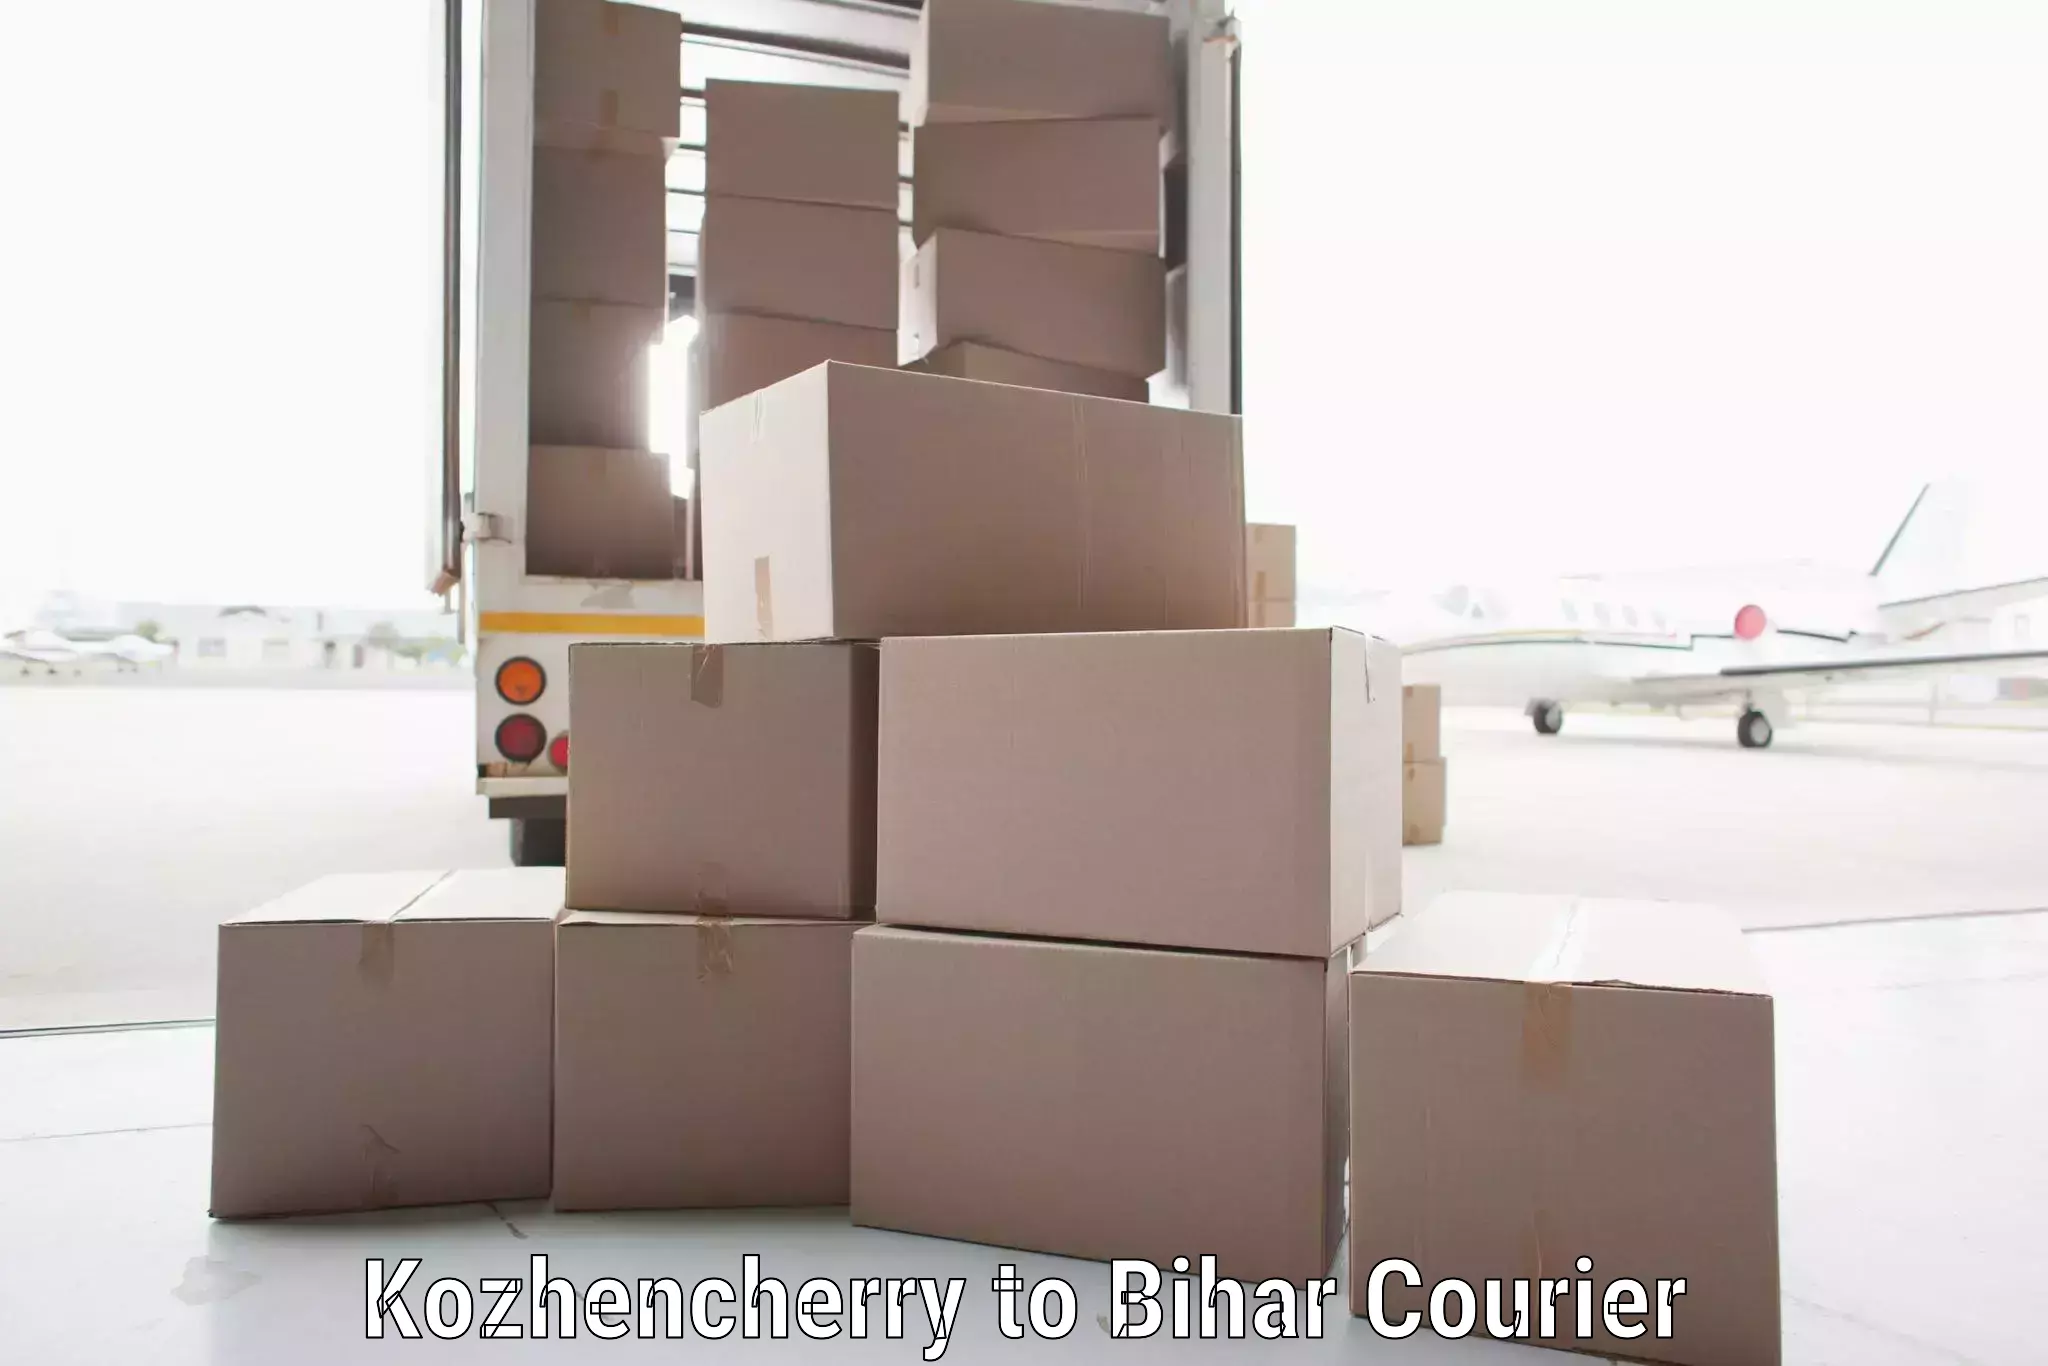 Express delivery capabilities Kozhencherry to Bharwara